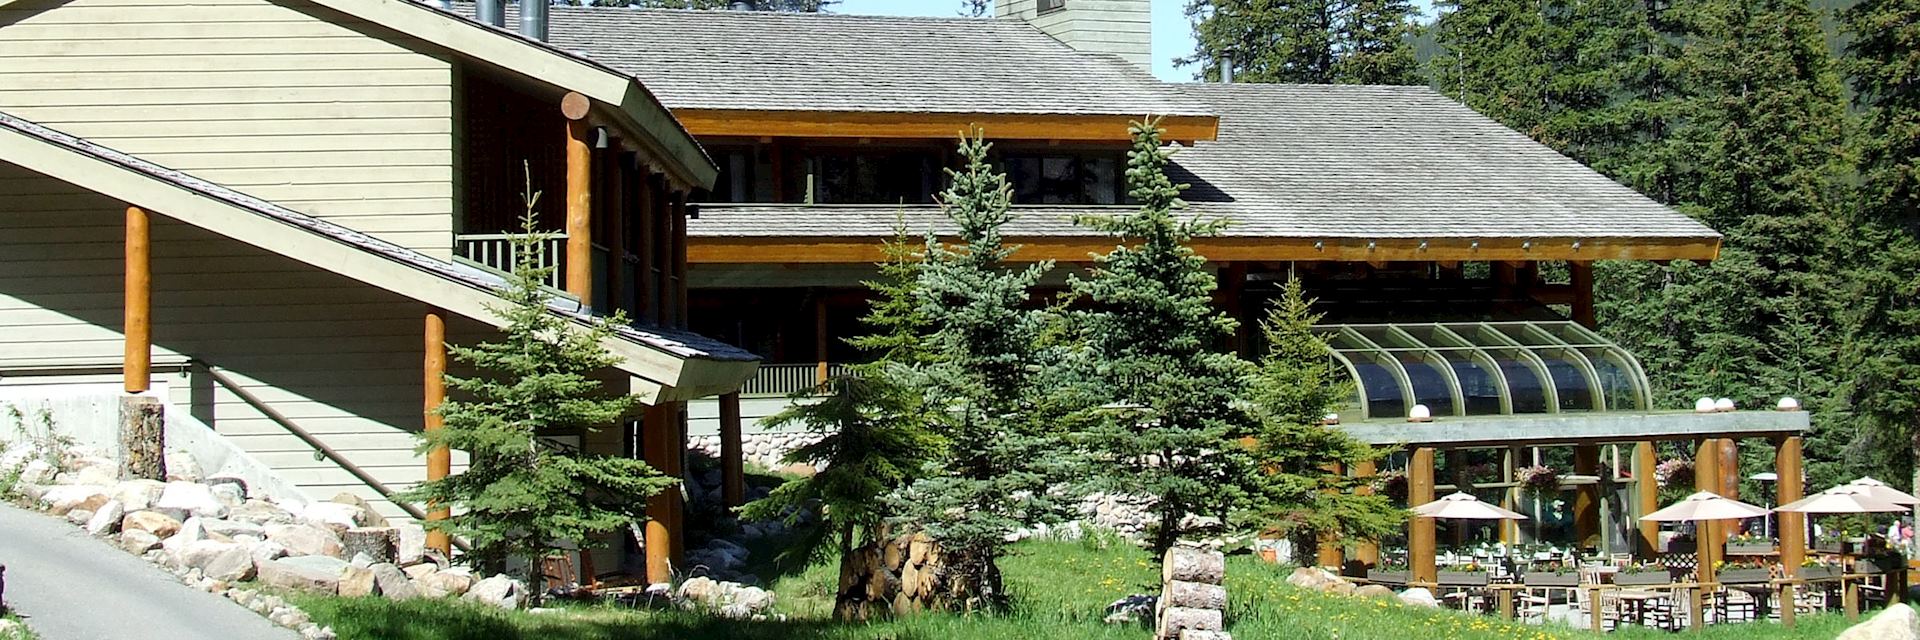 Moraine Lake Lodge, Canada